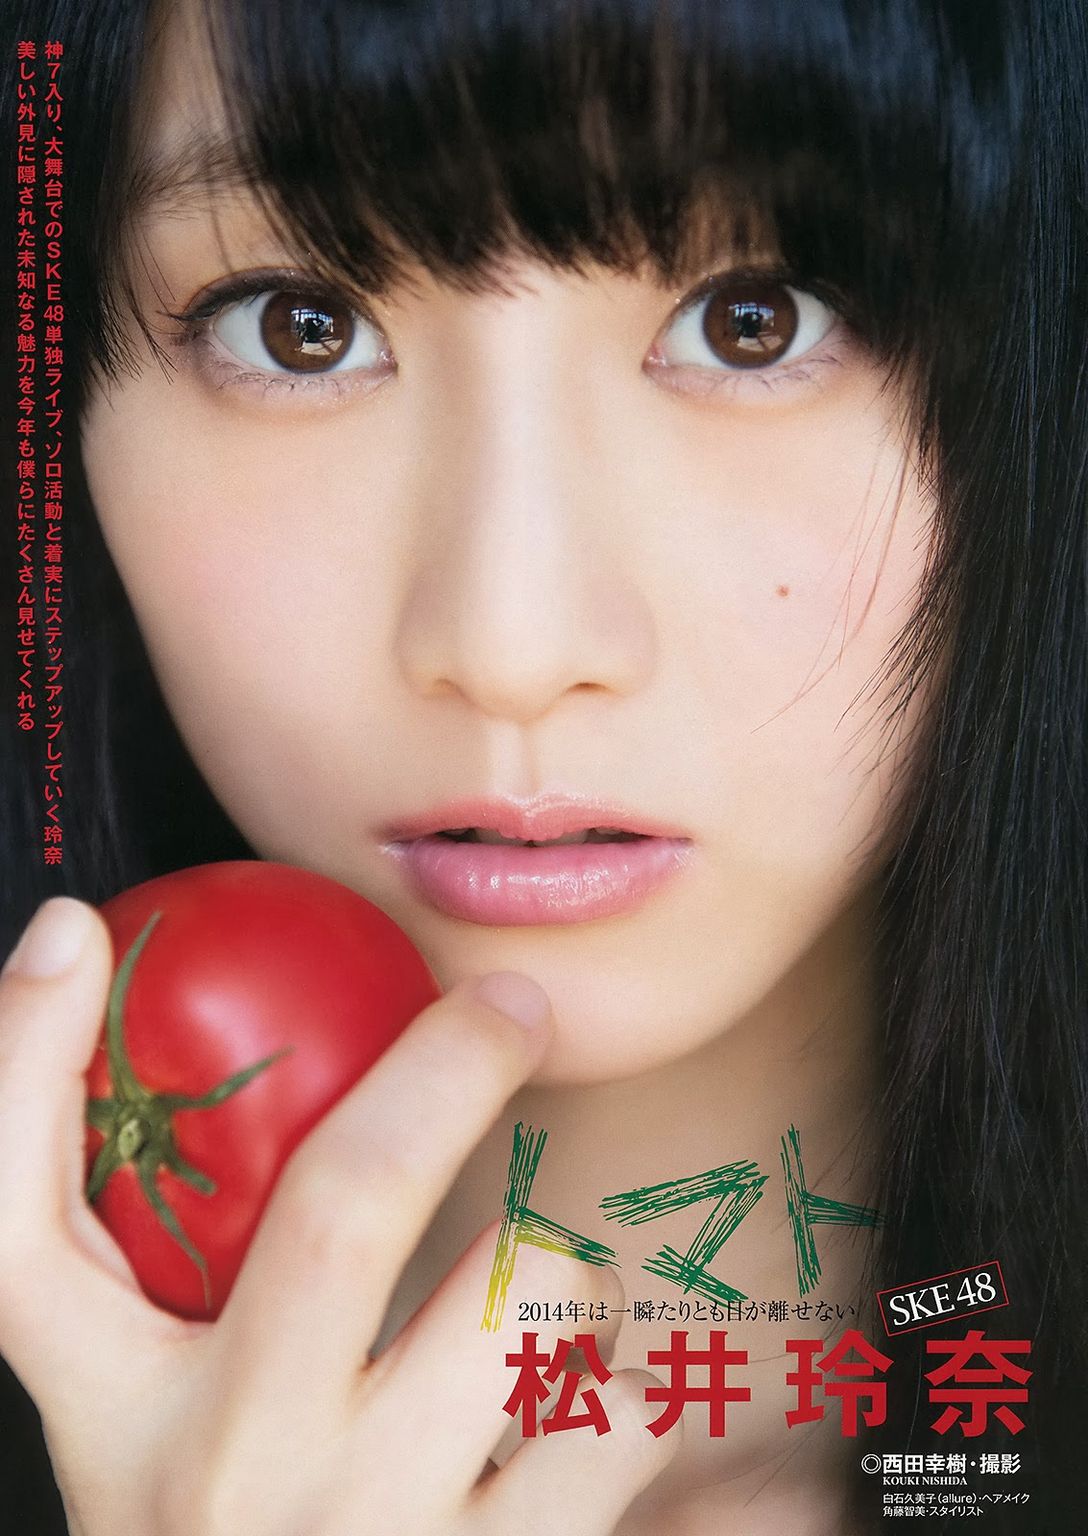 SKE48 Rena Matsui Tomato on Young Animal Magazine 001.jpg